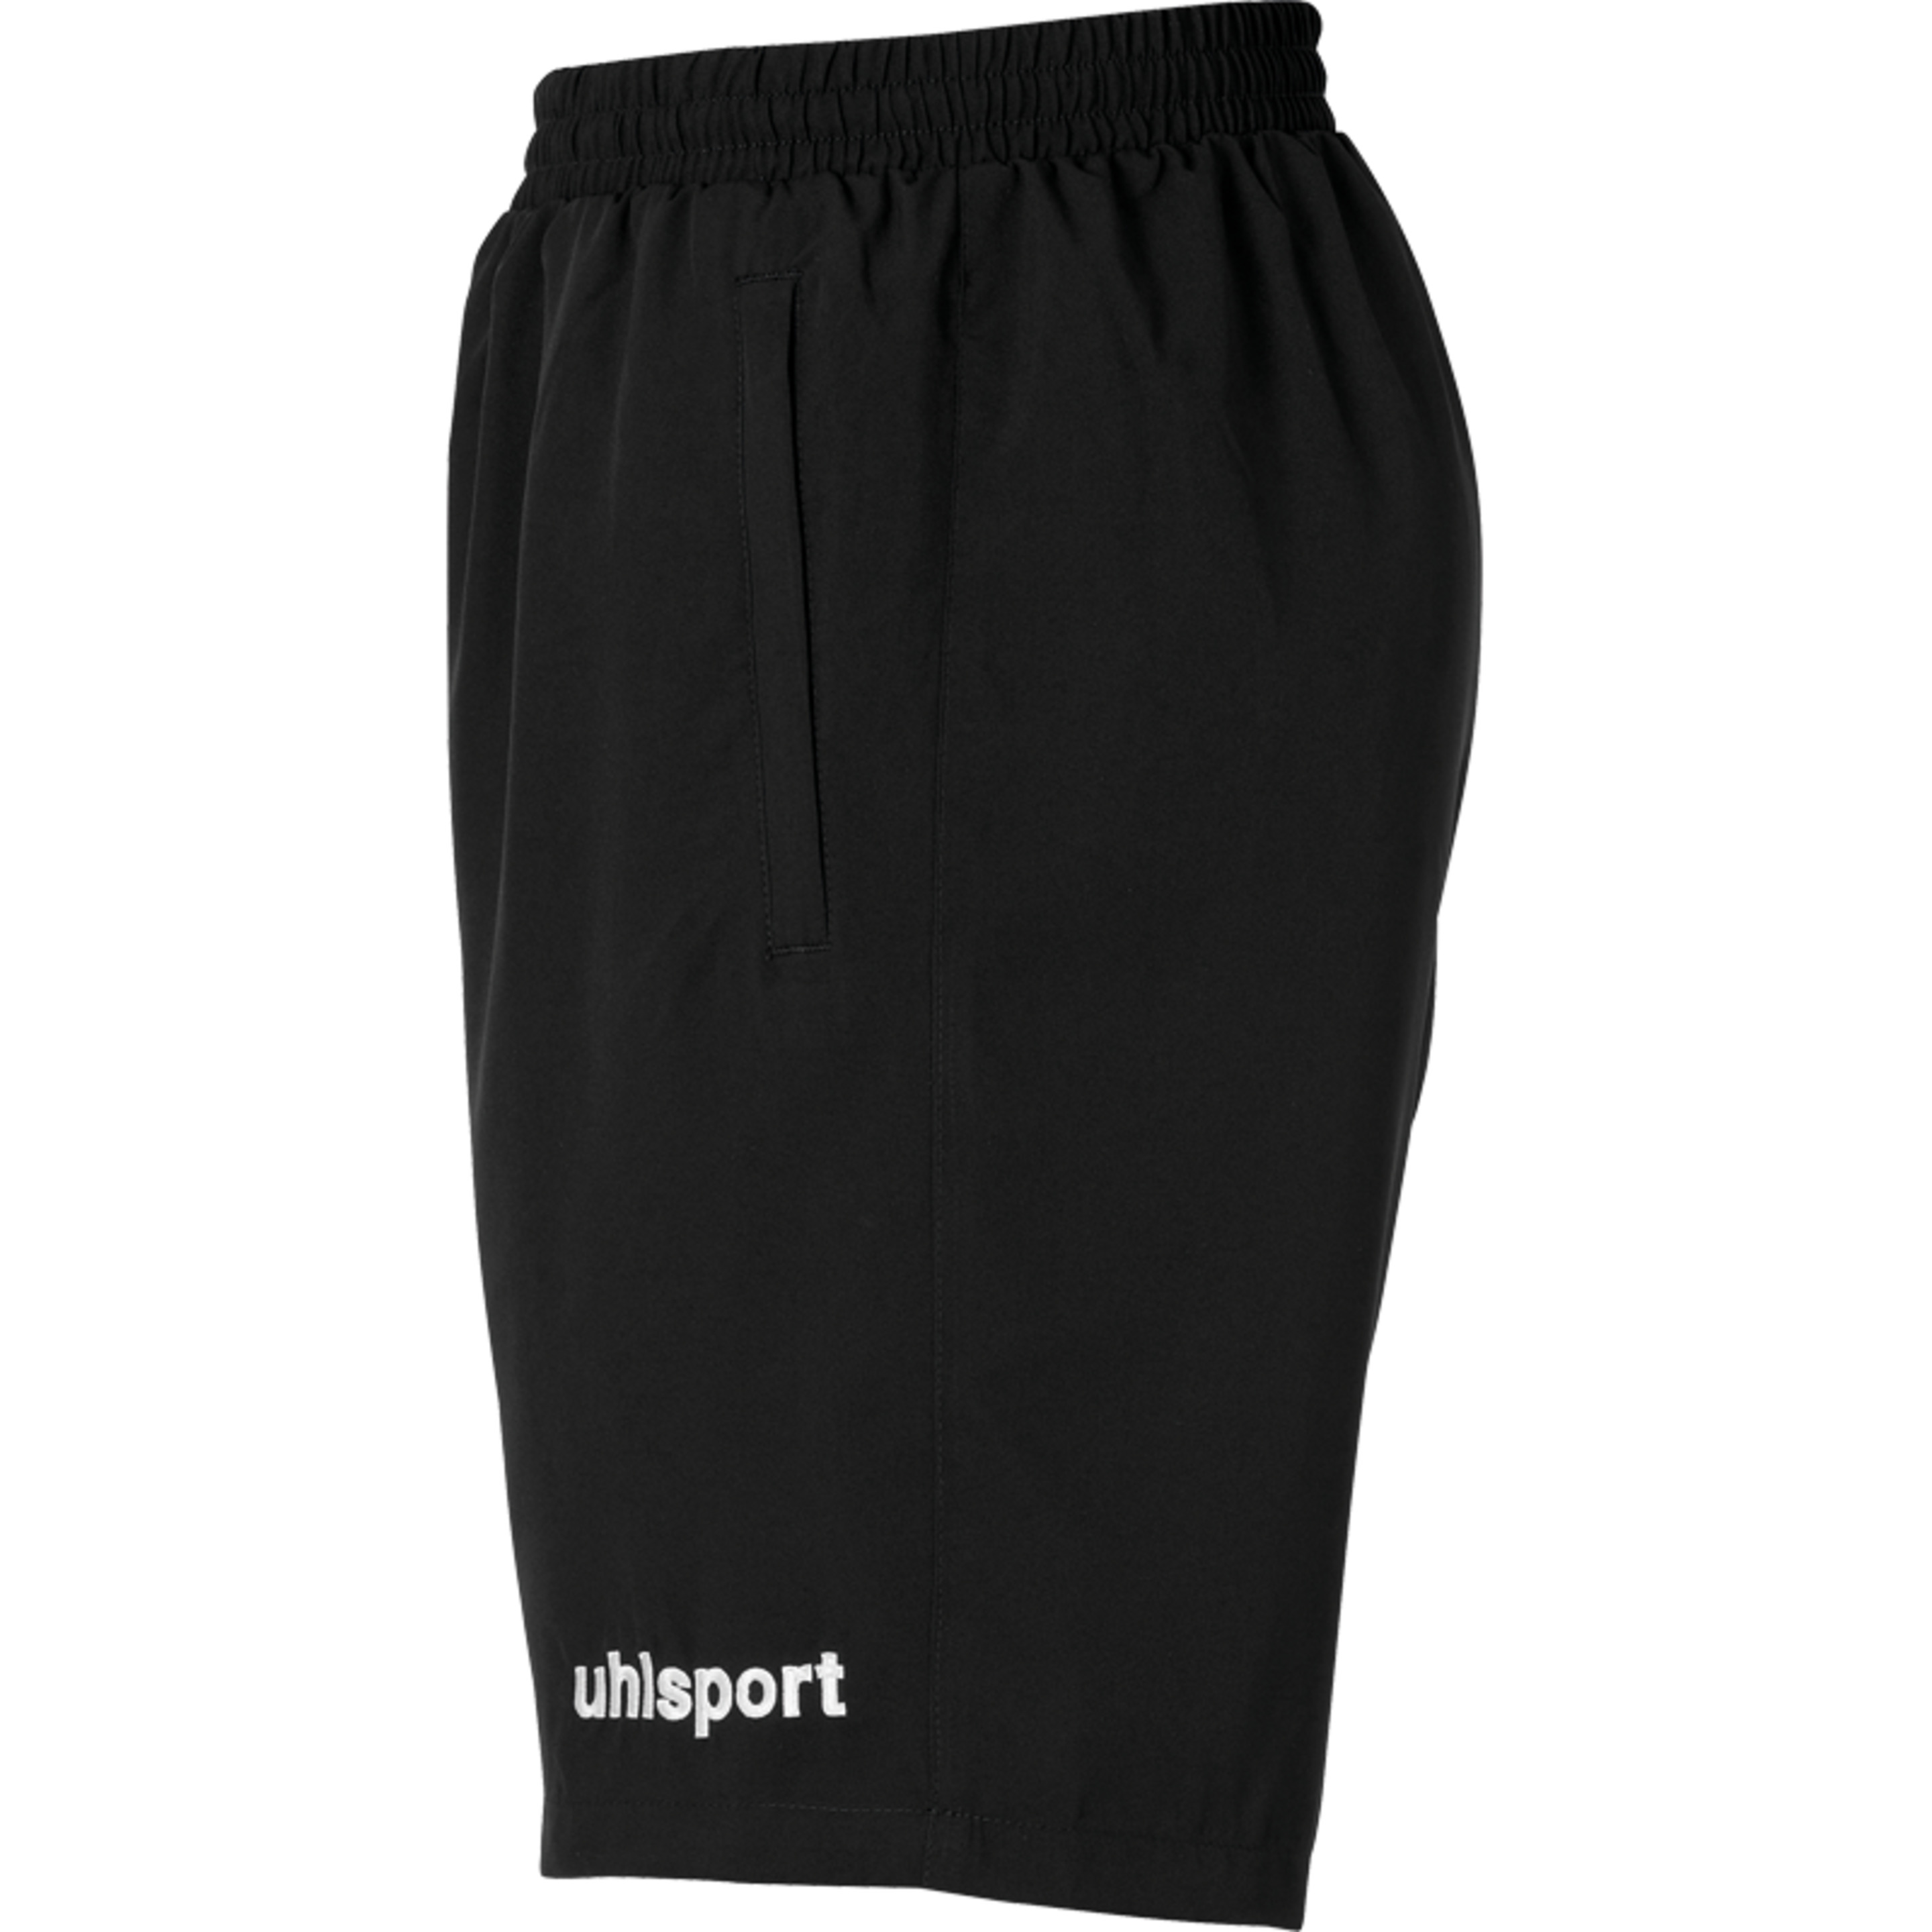 Essential Woven Shorts Black Uhlsport